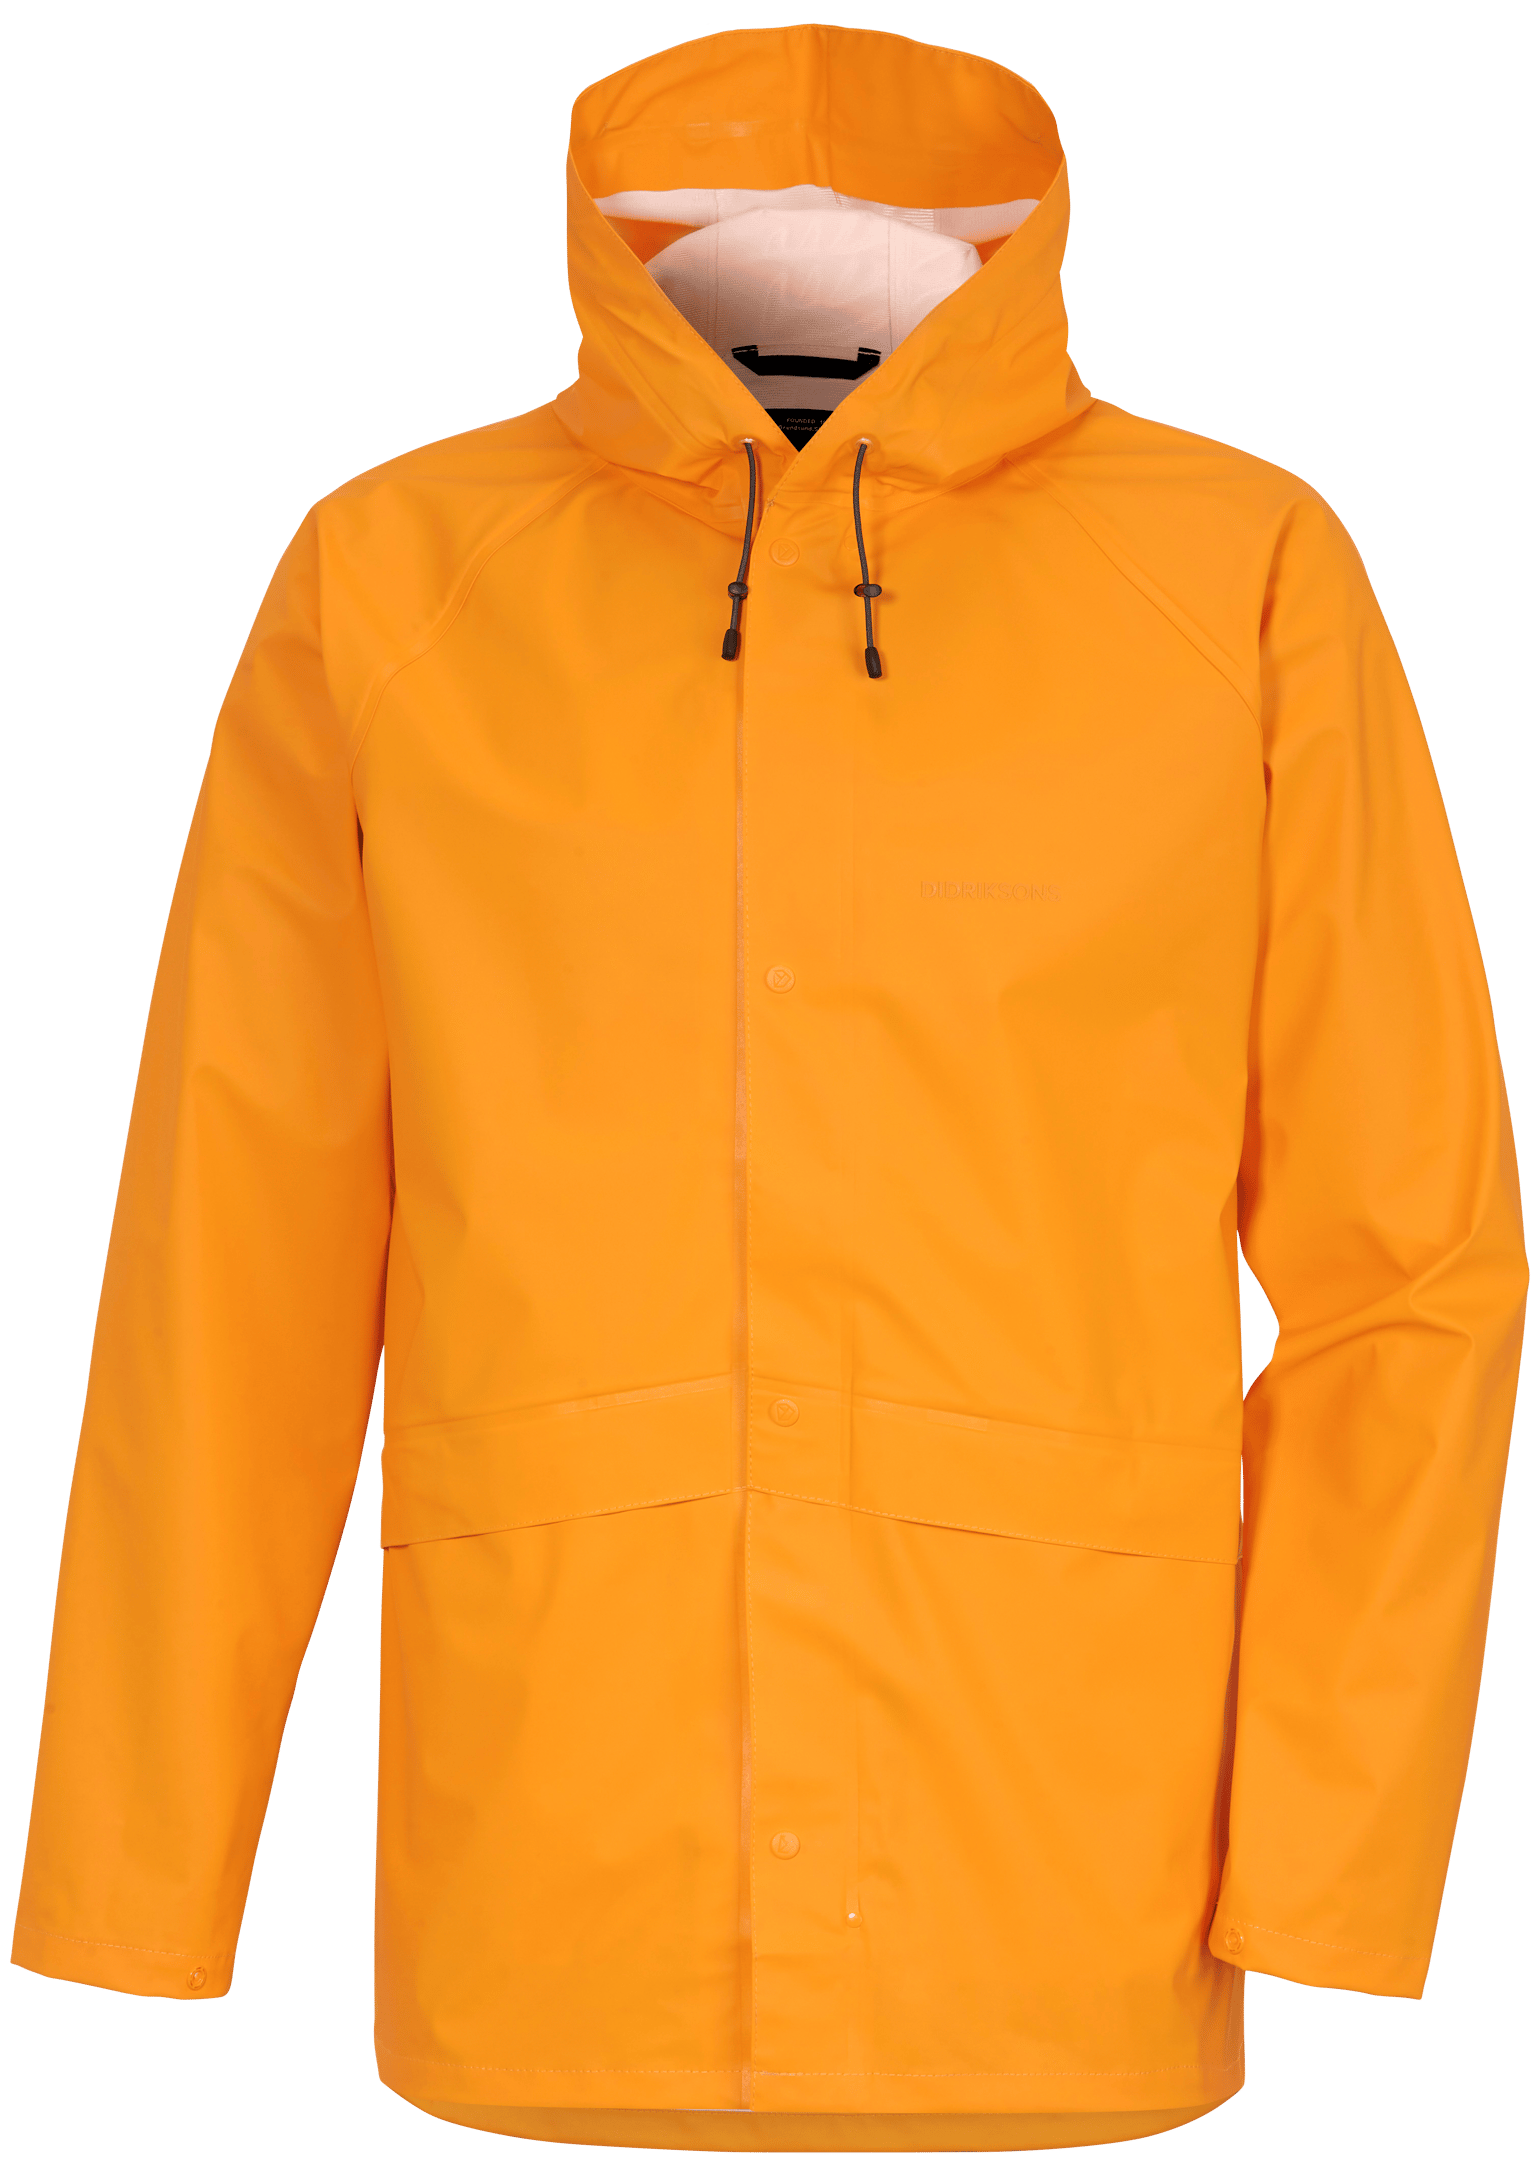 Didriksons Unisex Avon Jacket 2 Saffron Yellow